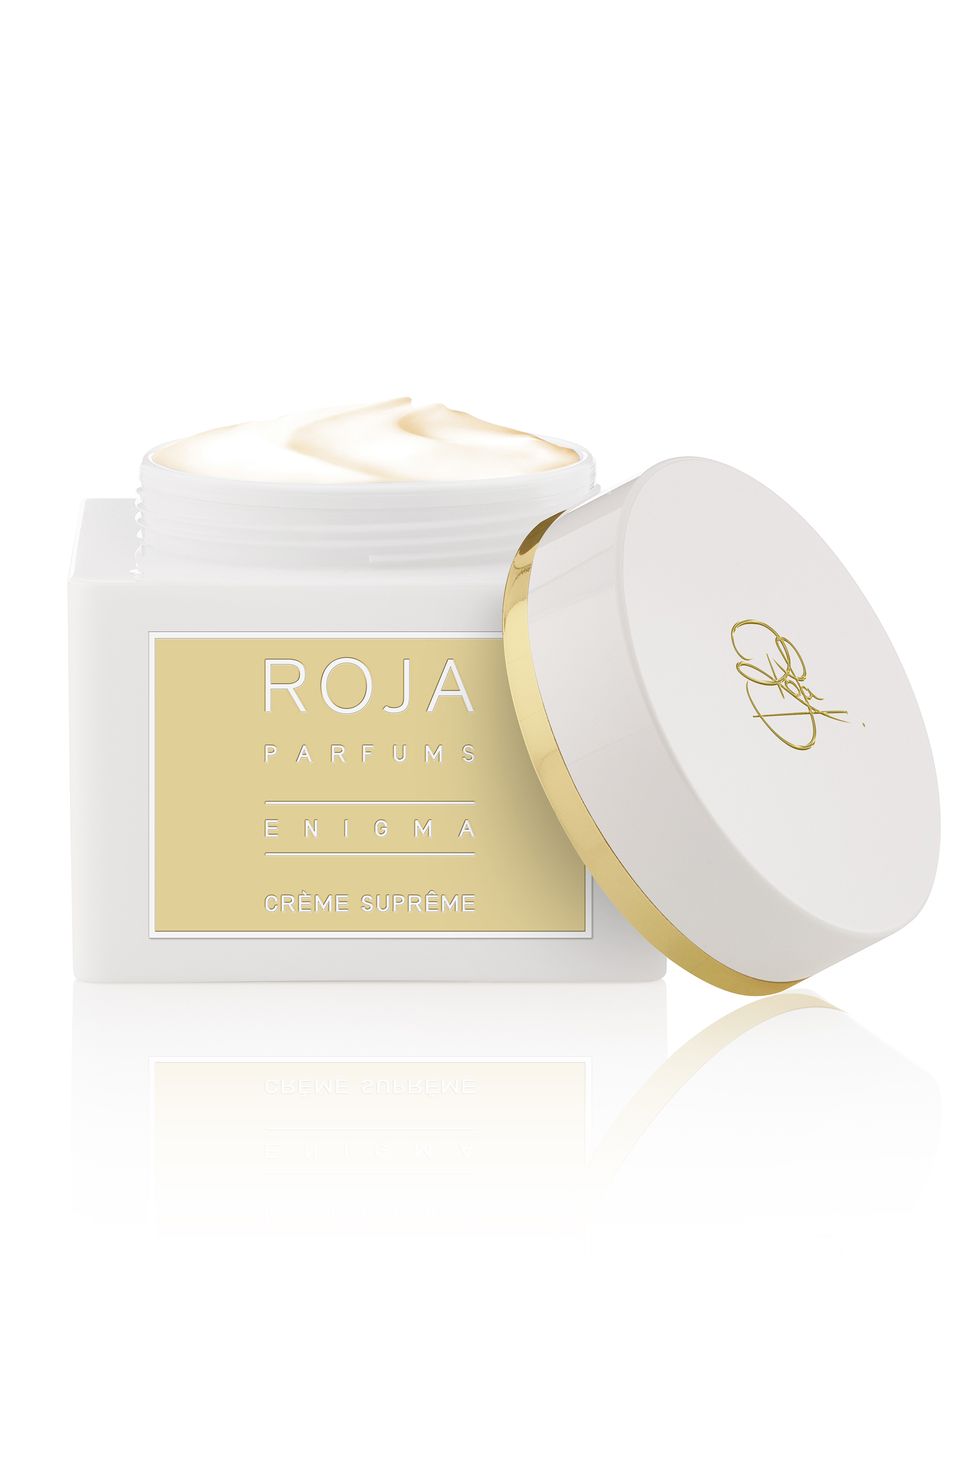 Roja Parfums Cream